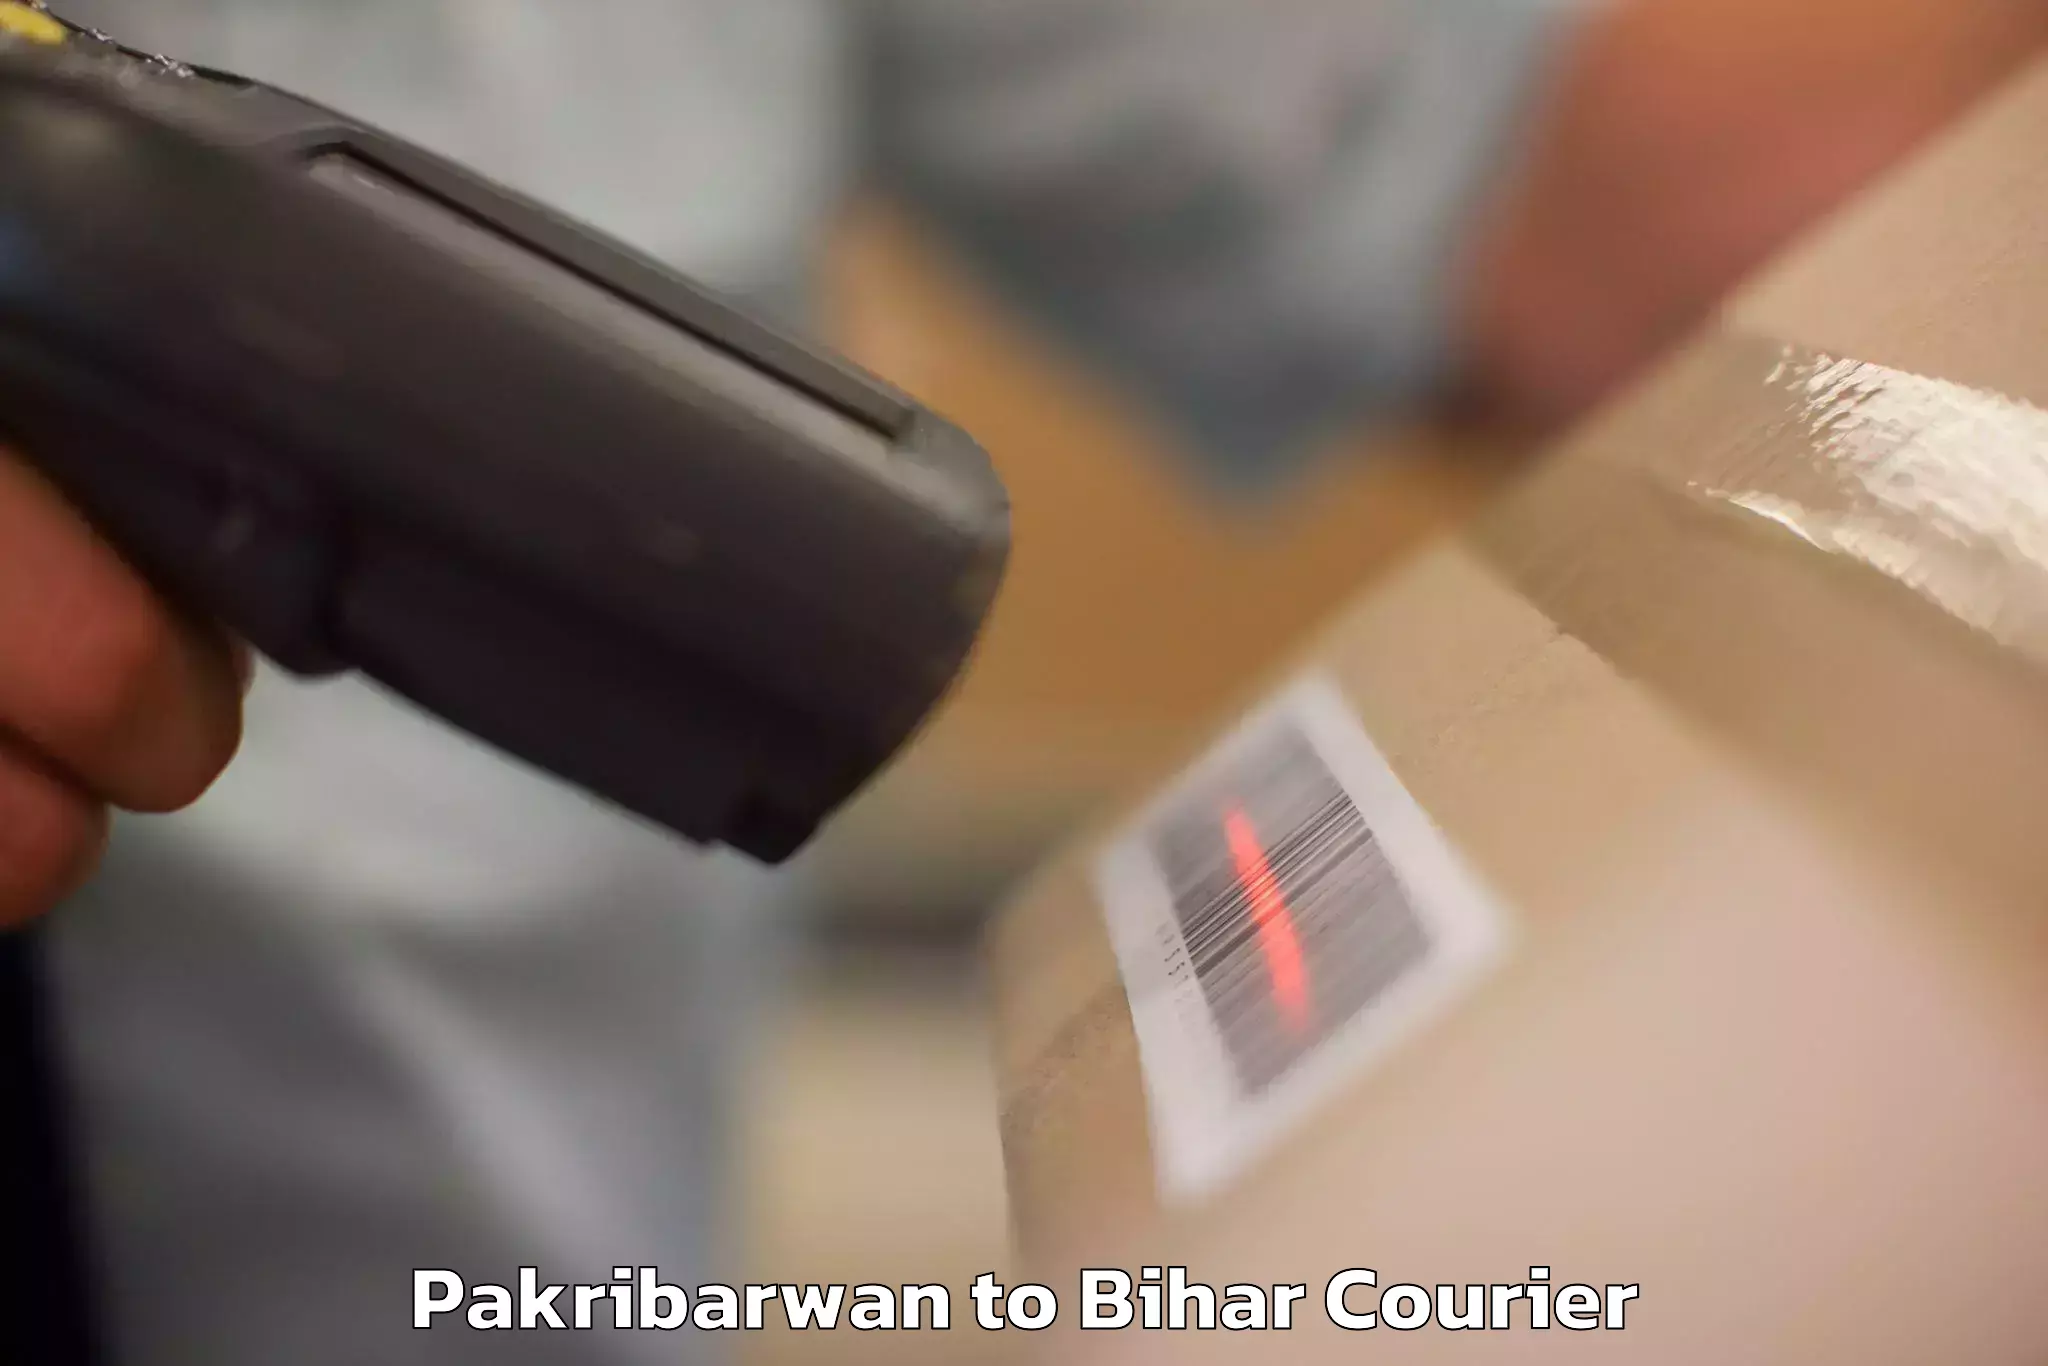 High-quality baggage shipment in Pakribarwan to Dhaka